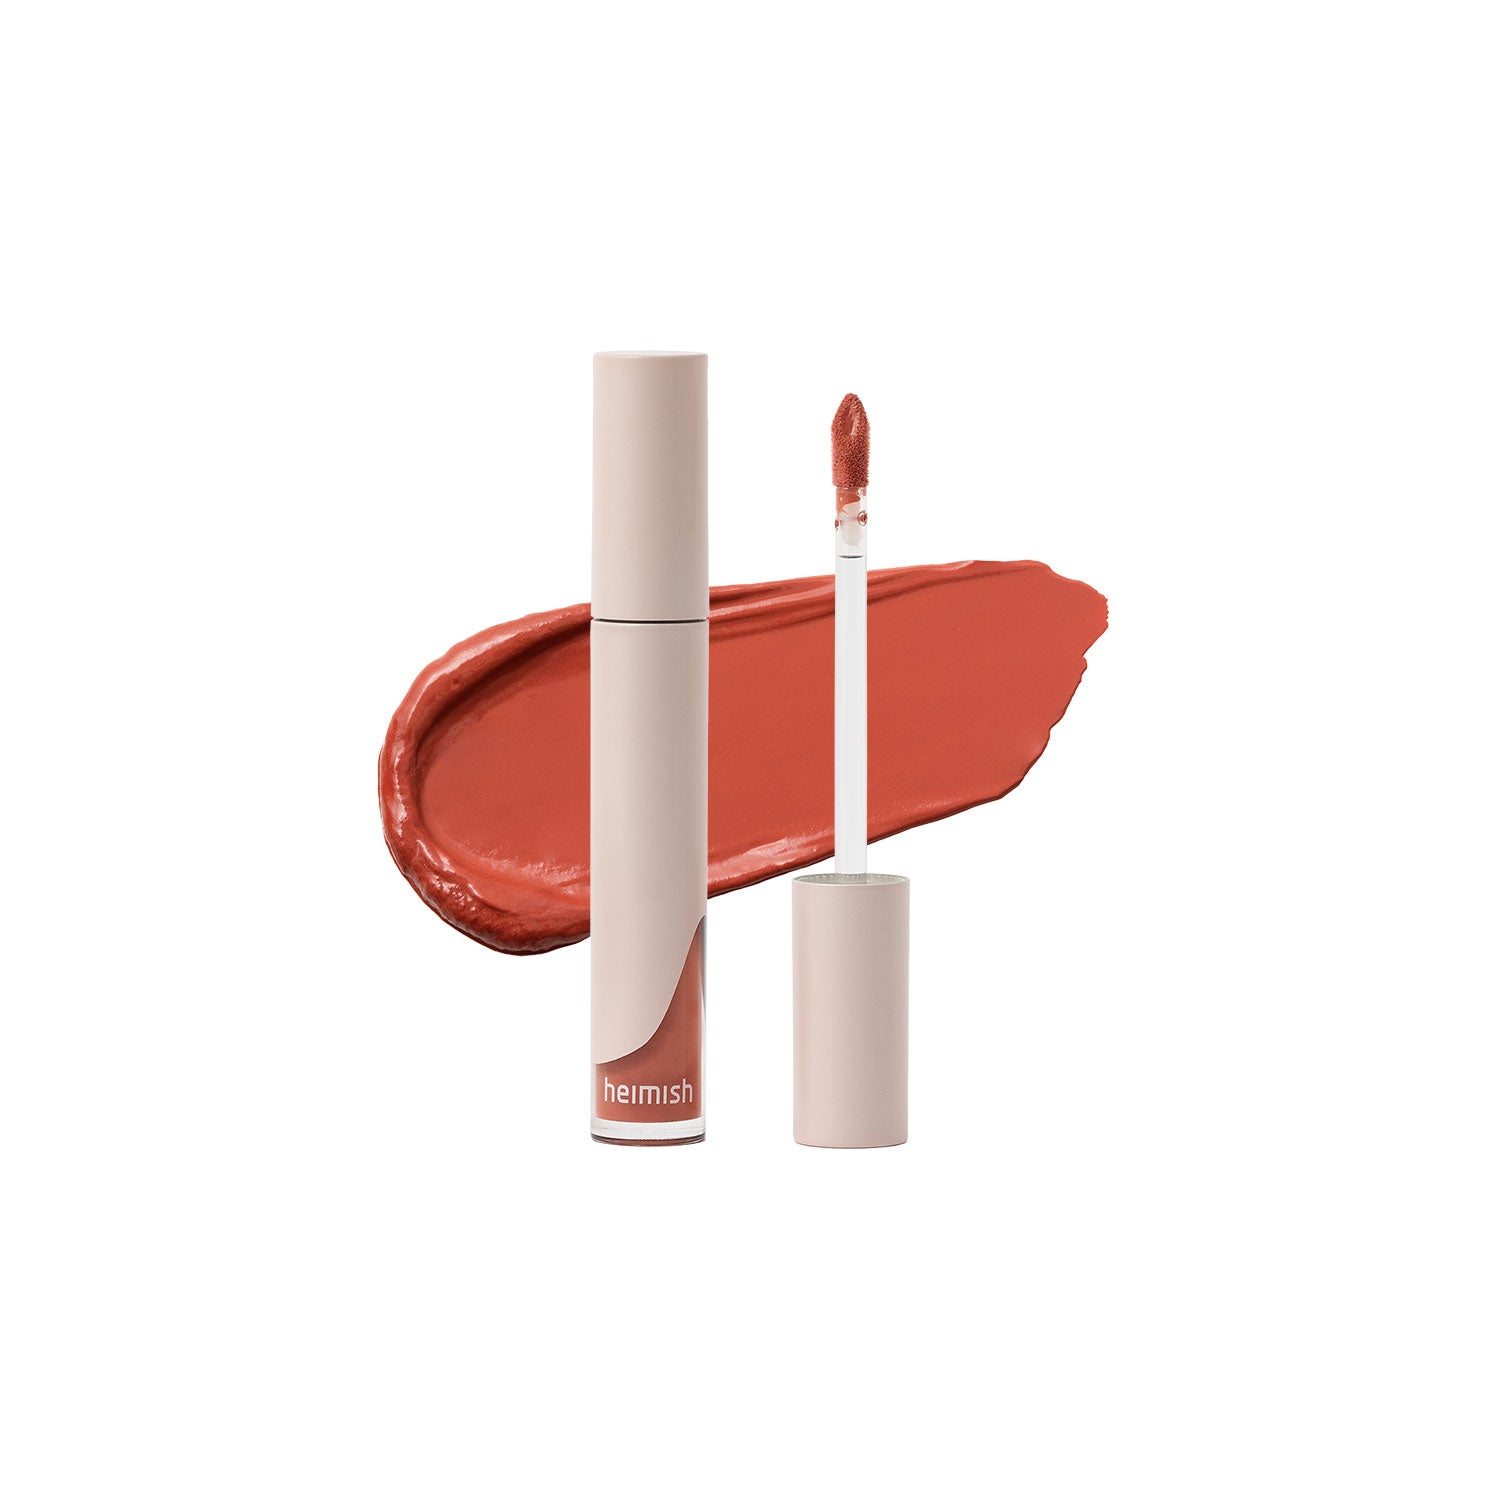 Dailism Liquid Lipstick 4g/0.14oz